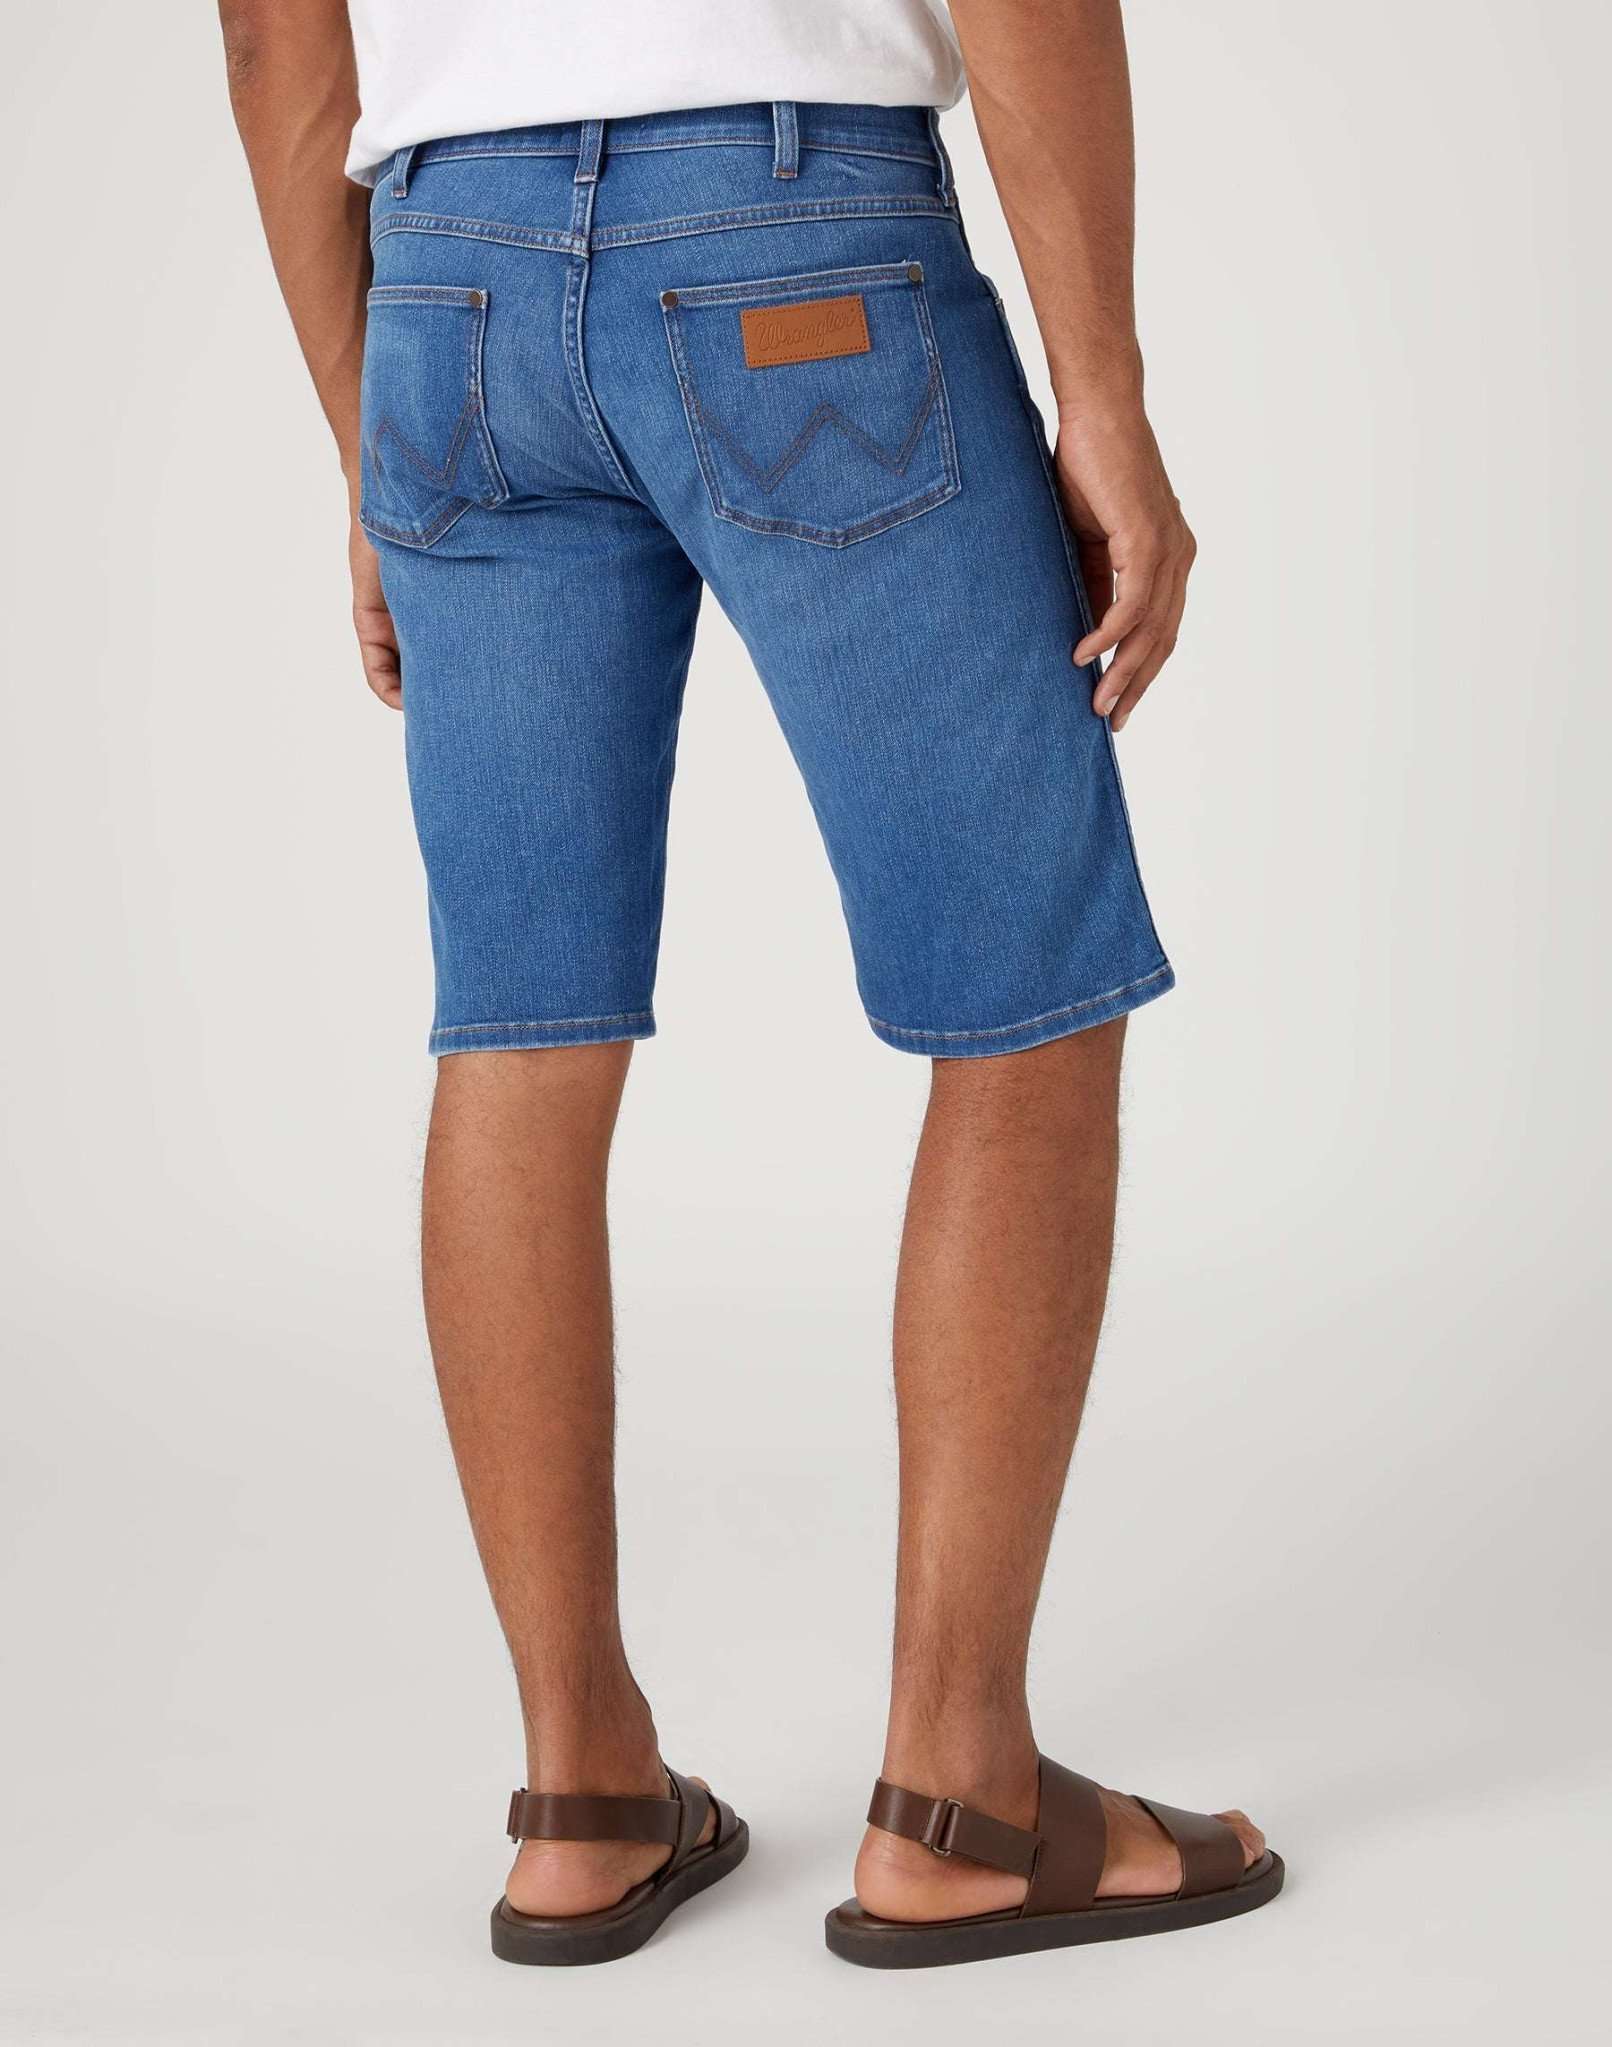 Colton Shorts in Blue Vortex Jeansshorts Wrangler   